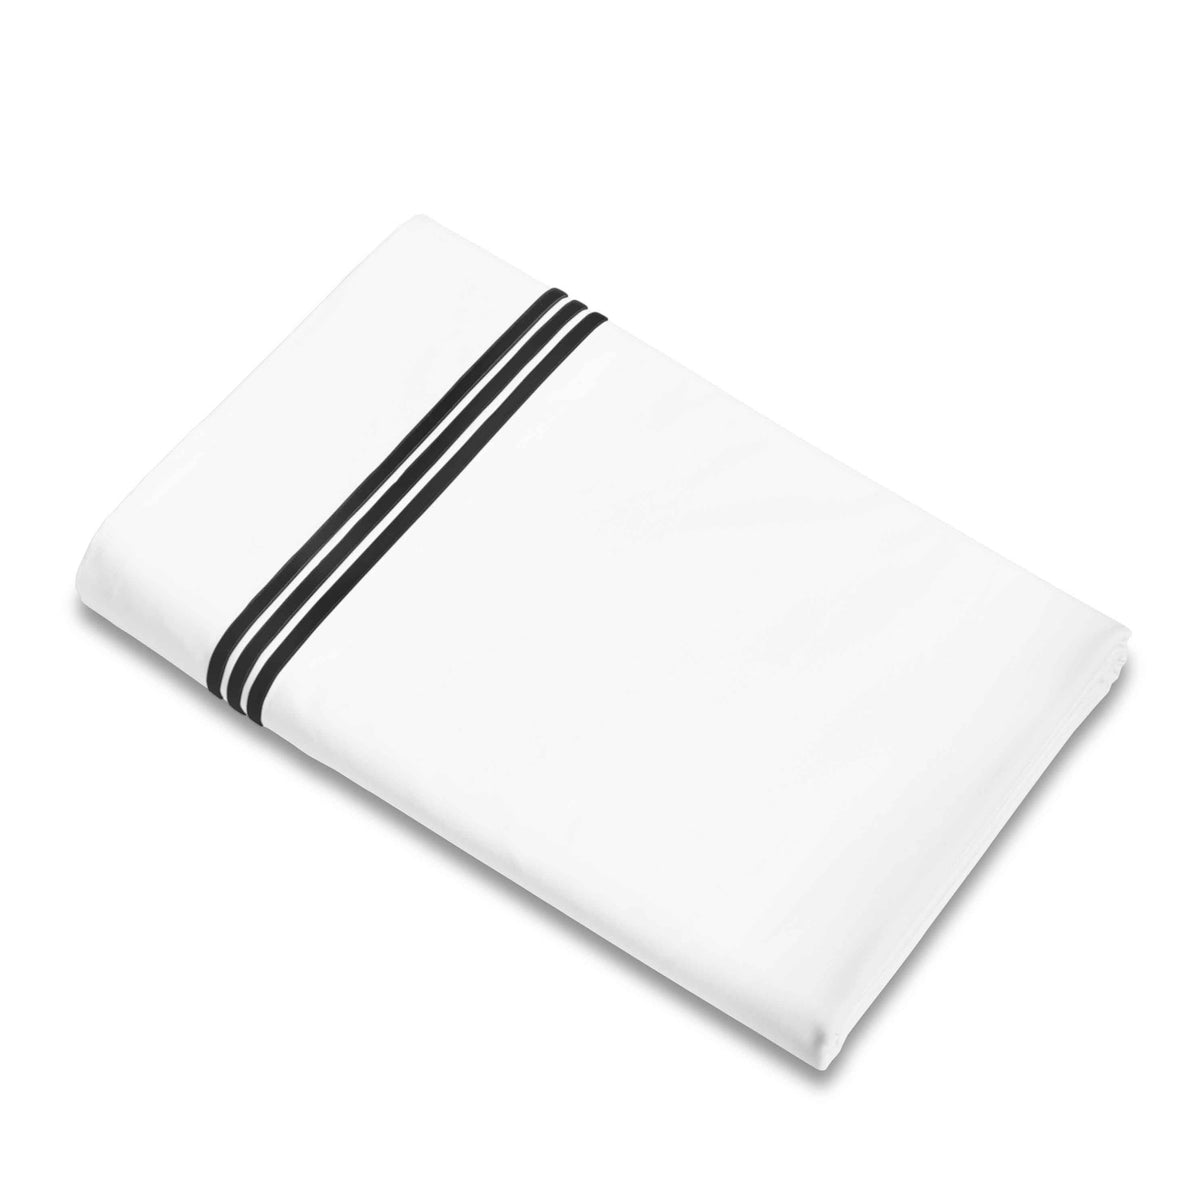 Flat Sheet of Signoria Platinum Percale Bedding in White/Black Color